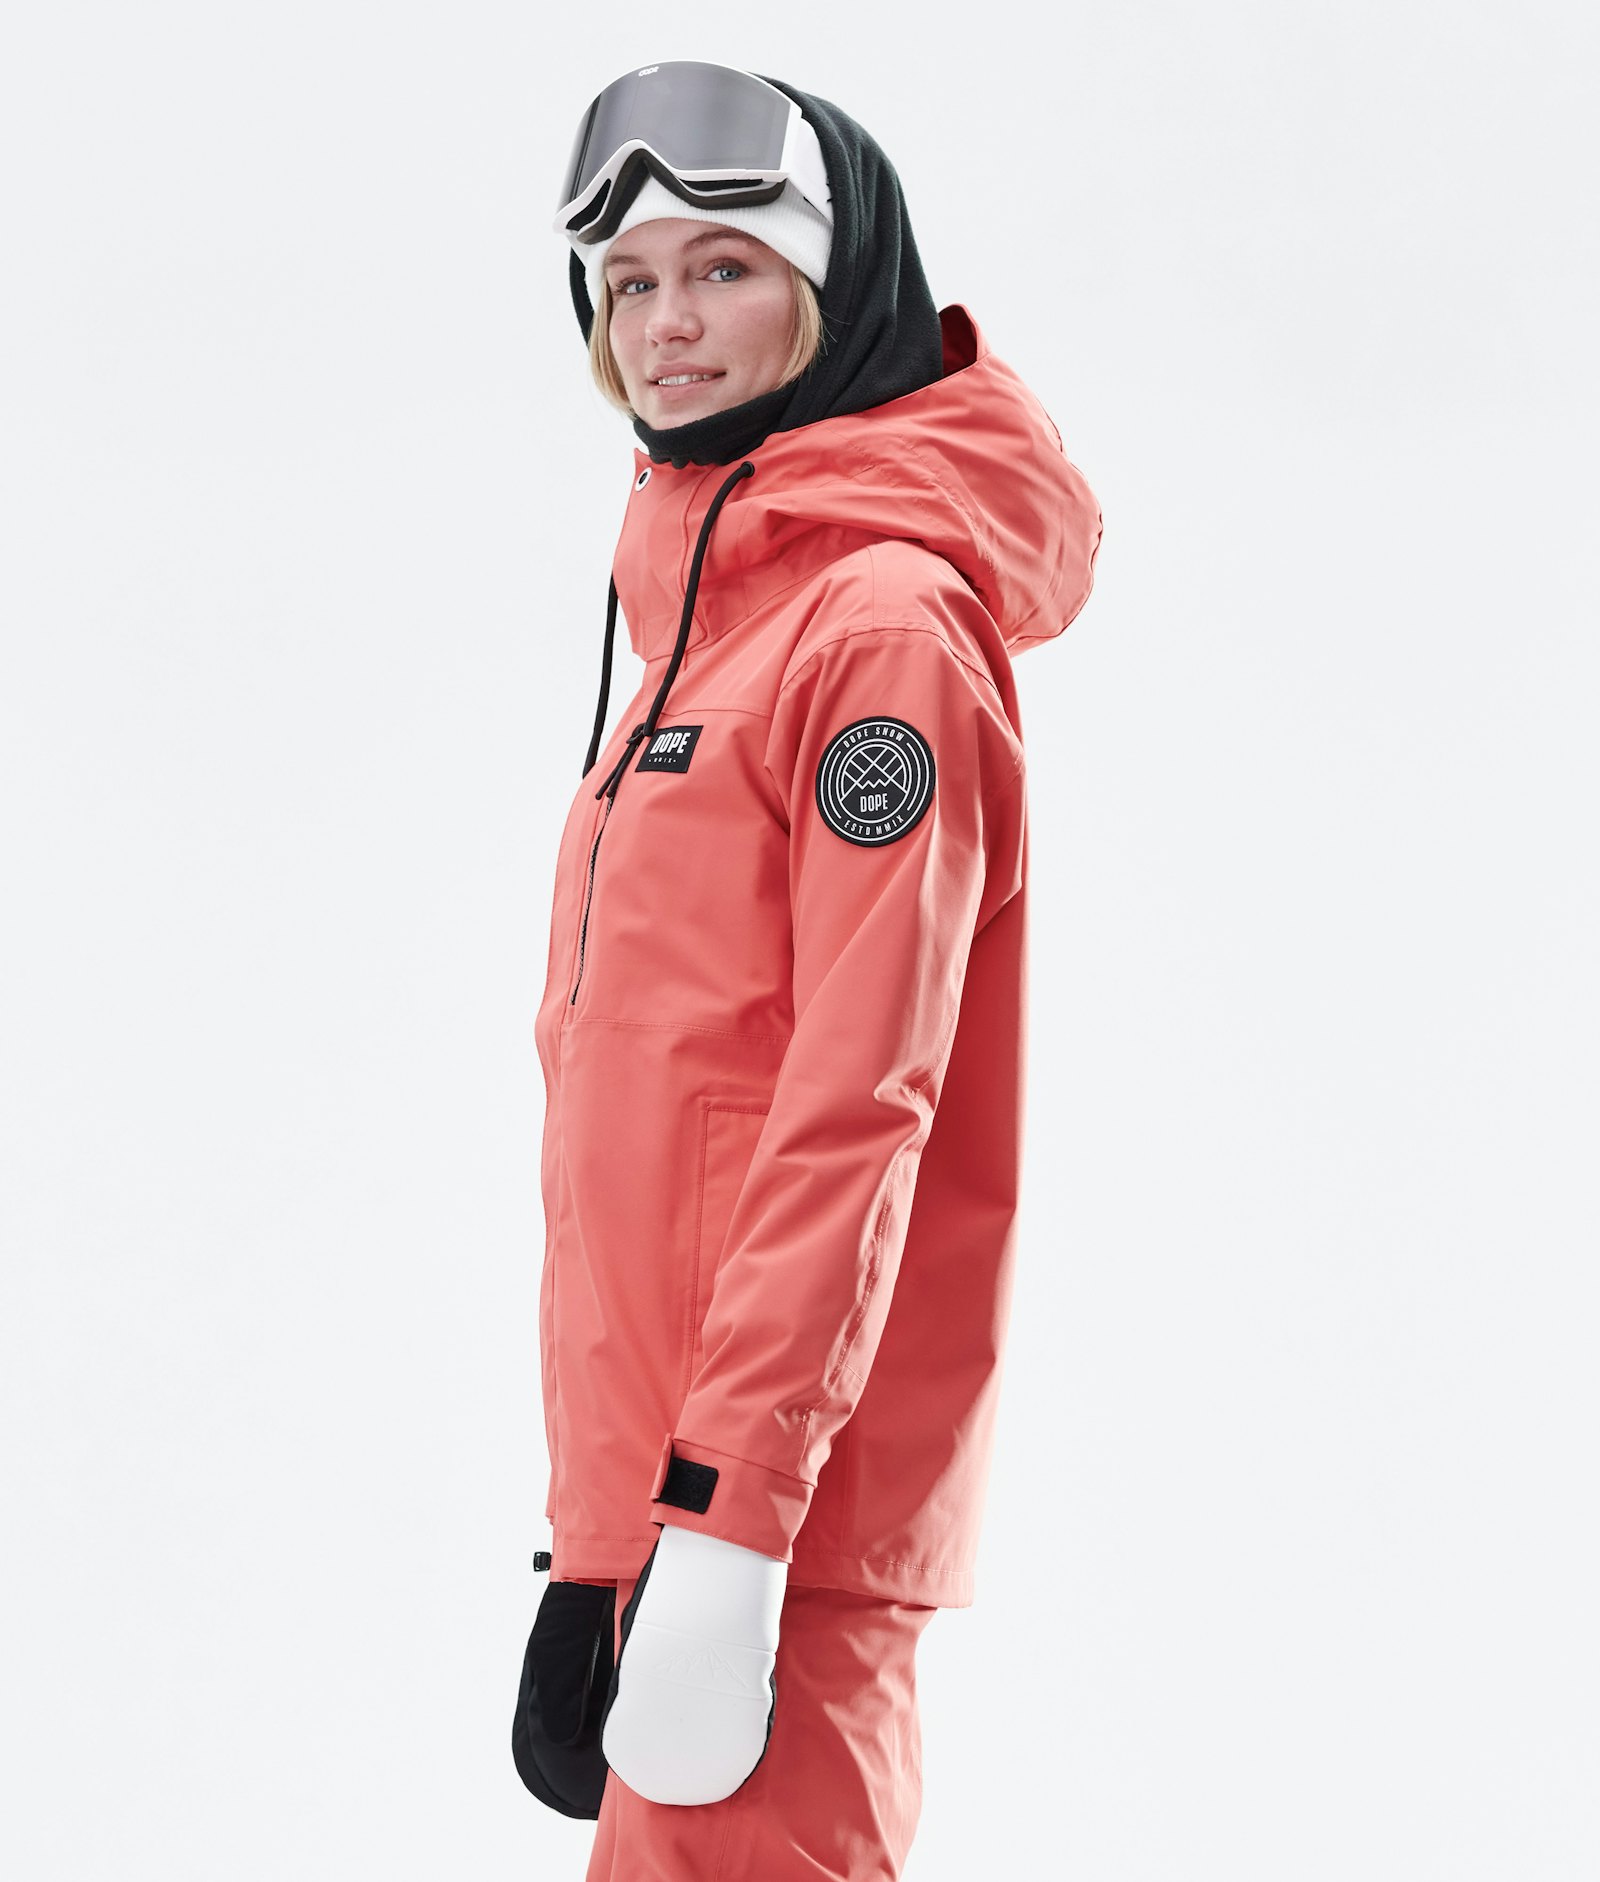 Dope Blizzard W Full Zip 2020 Snowboard Jacket Women Coral